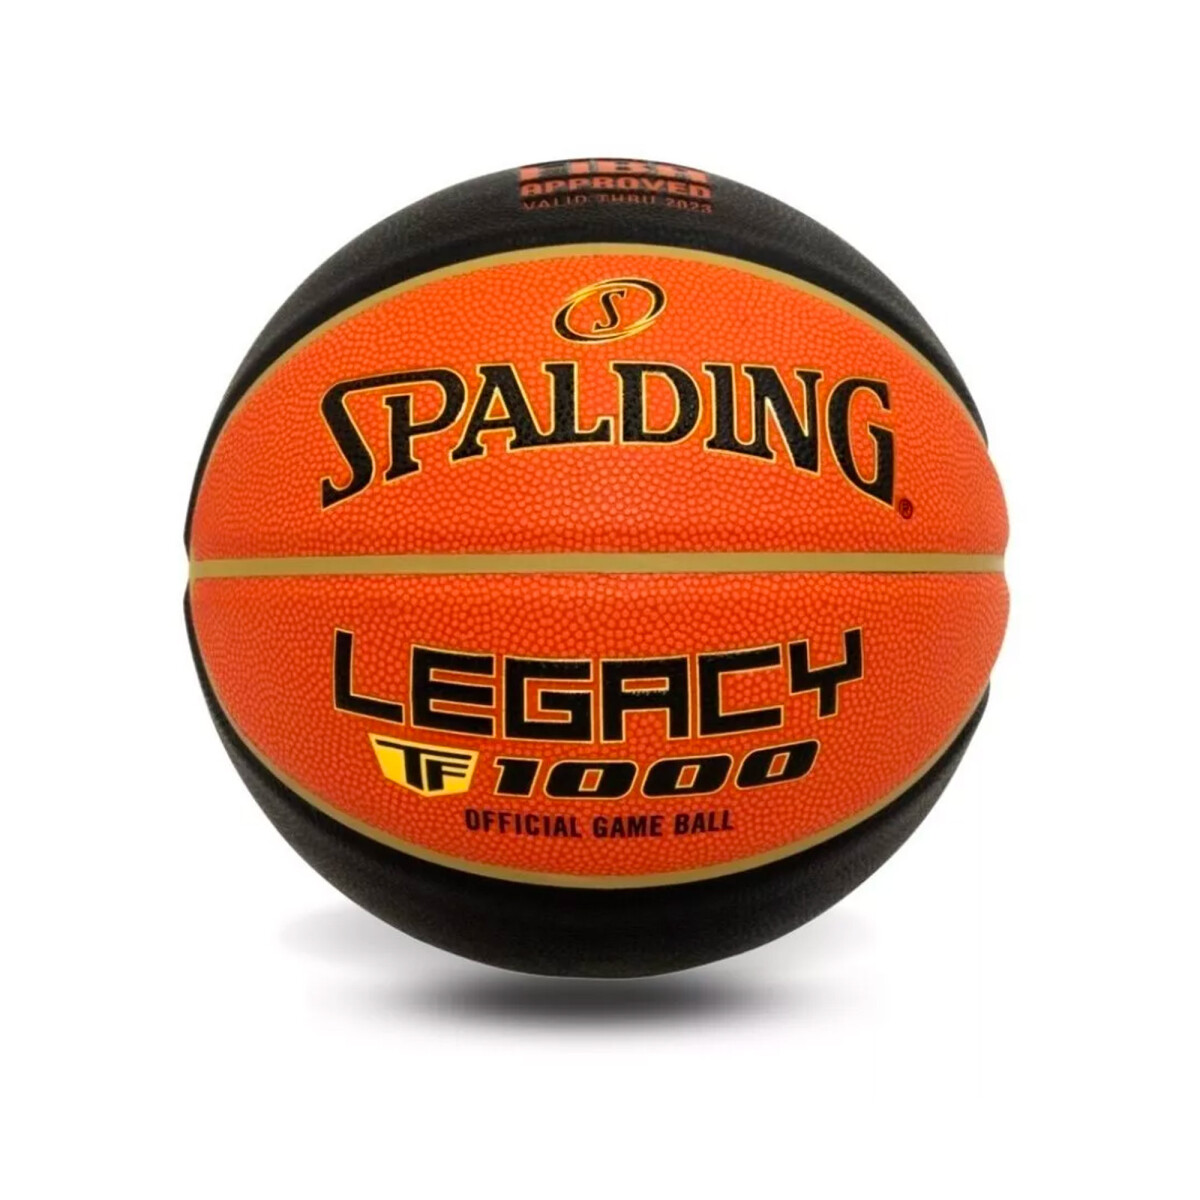 Pelota Oficial Basket Spalding - TF1000 